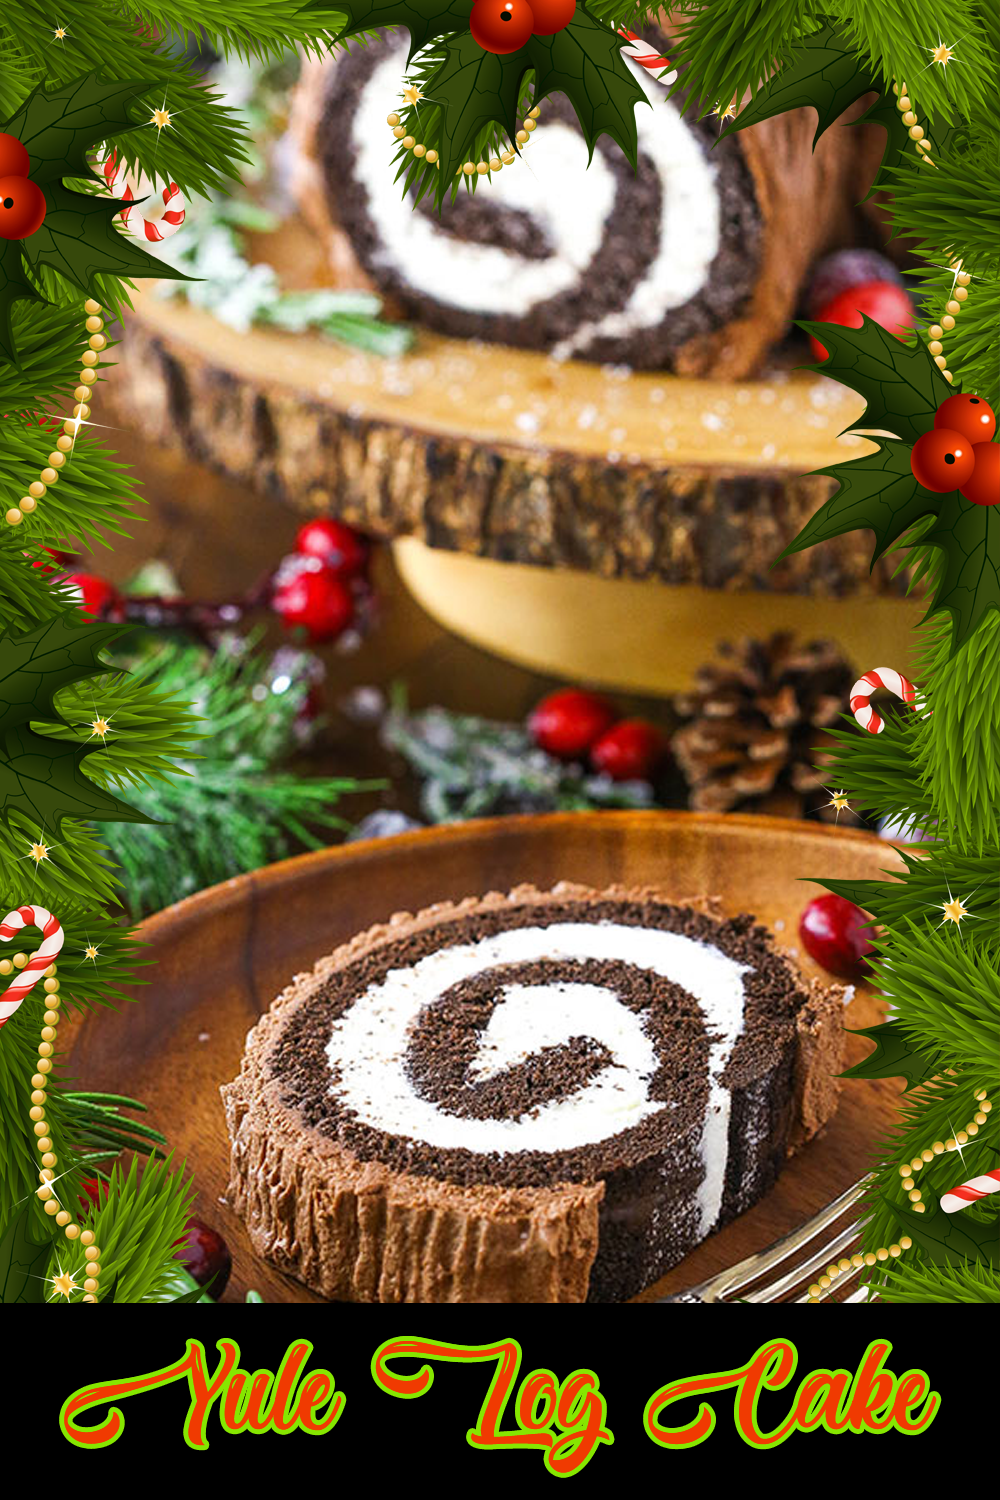 Yule Log Cake for Christmas Recipe